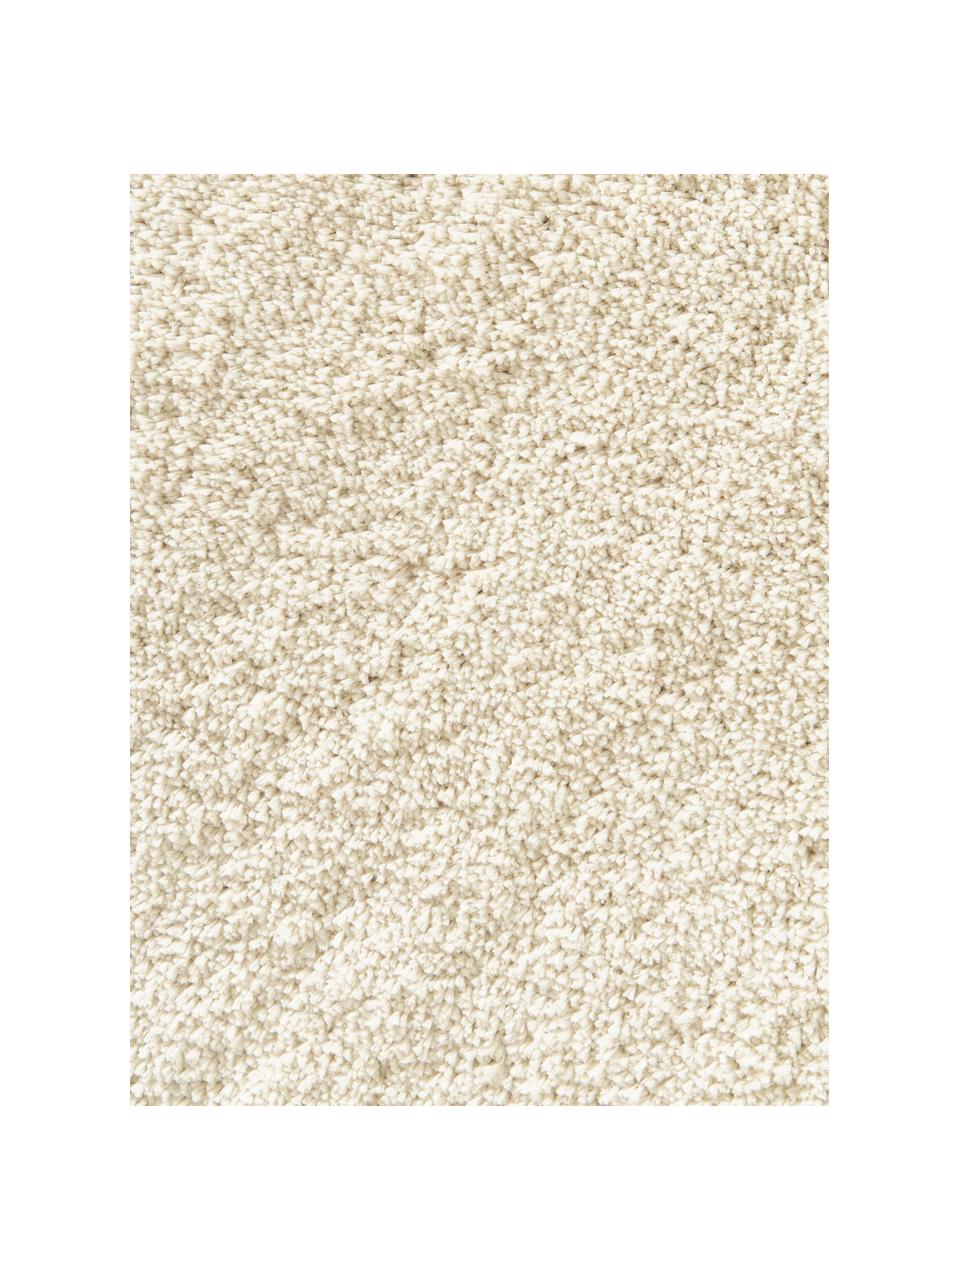 Pluizig rond hoogpolig vloerkleed Leighton, Onderzijde: 70% polyester, 30% katoen, Crèmewit, Ø 120 cm (maat S)